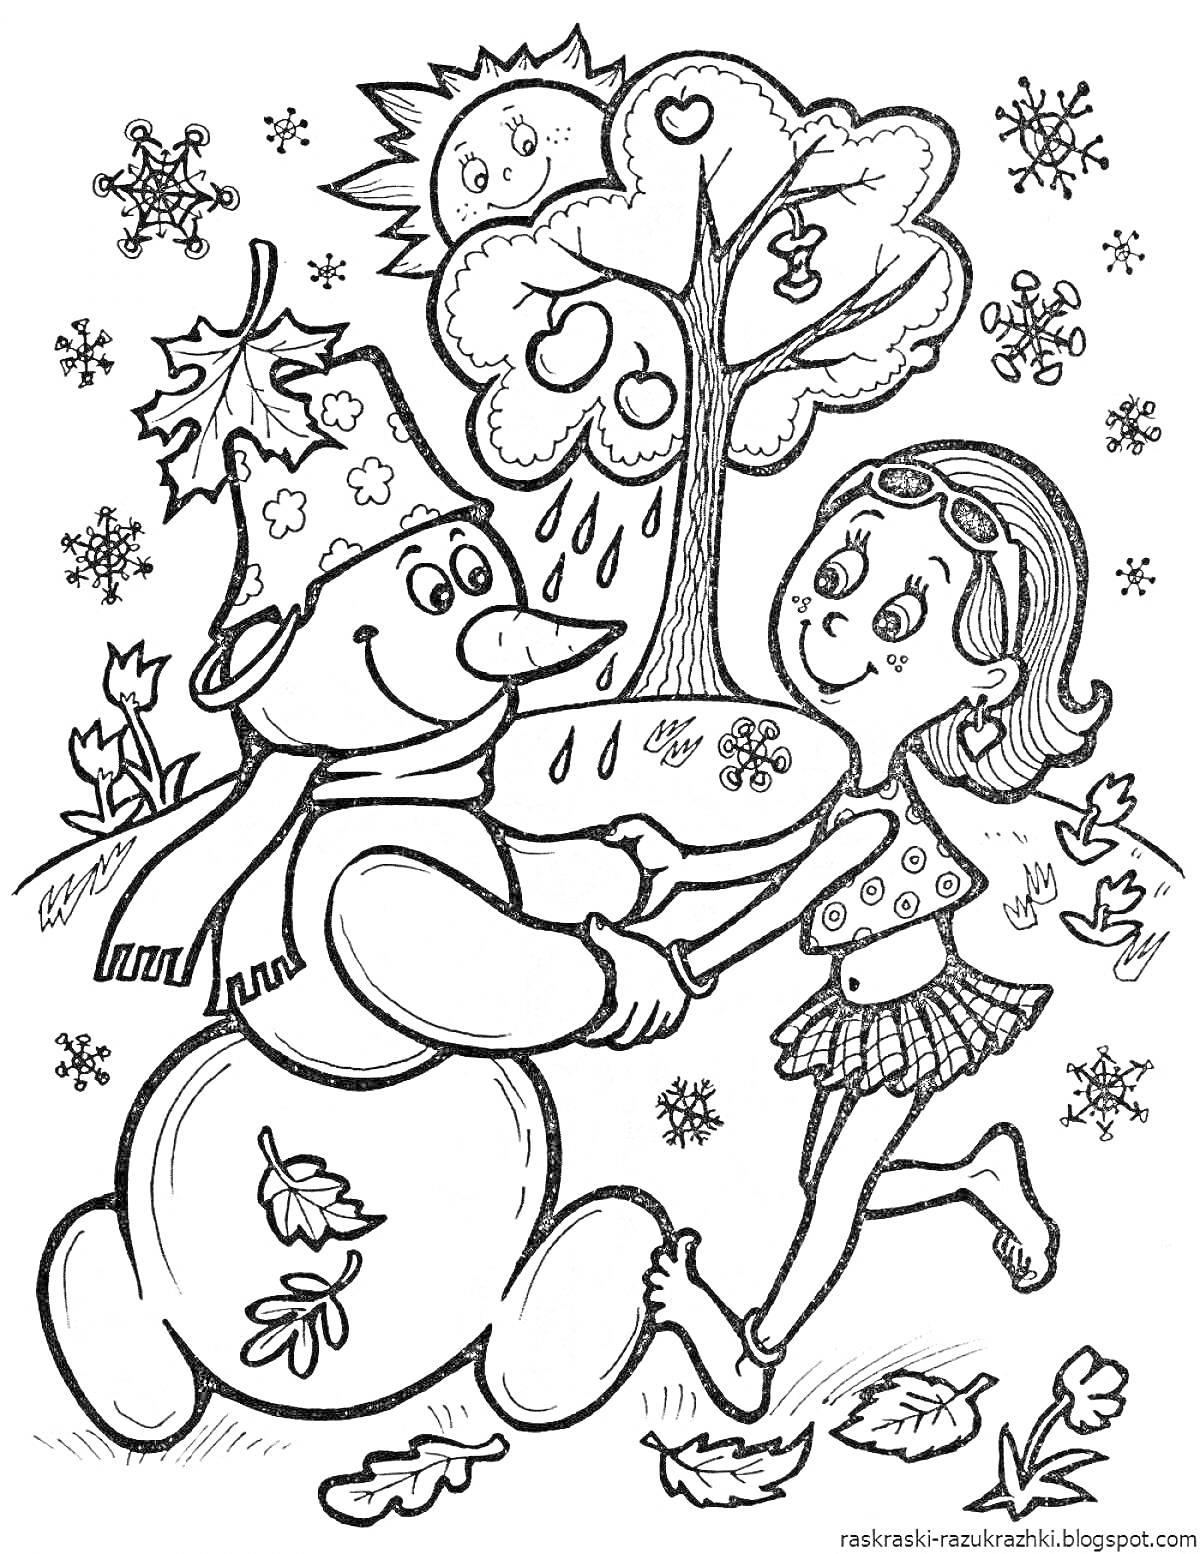 Девочка и снеговик танцуют на фоне дерева с символами времён года (солнце, тучи, снежинки, капли дождя и листья)